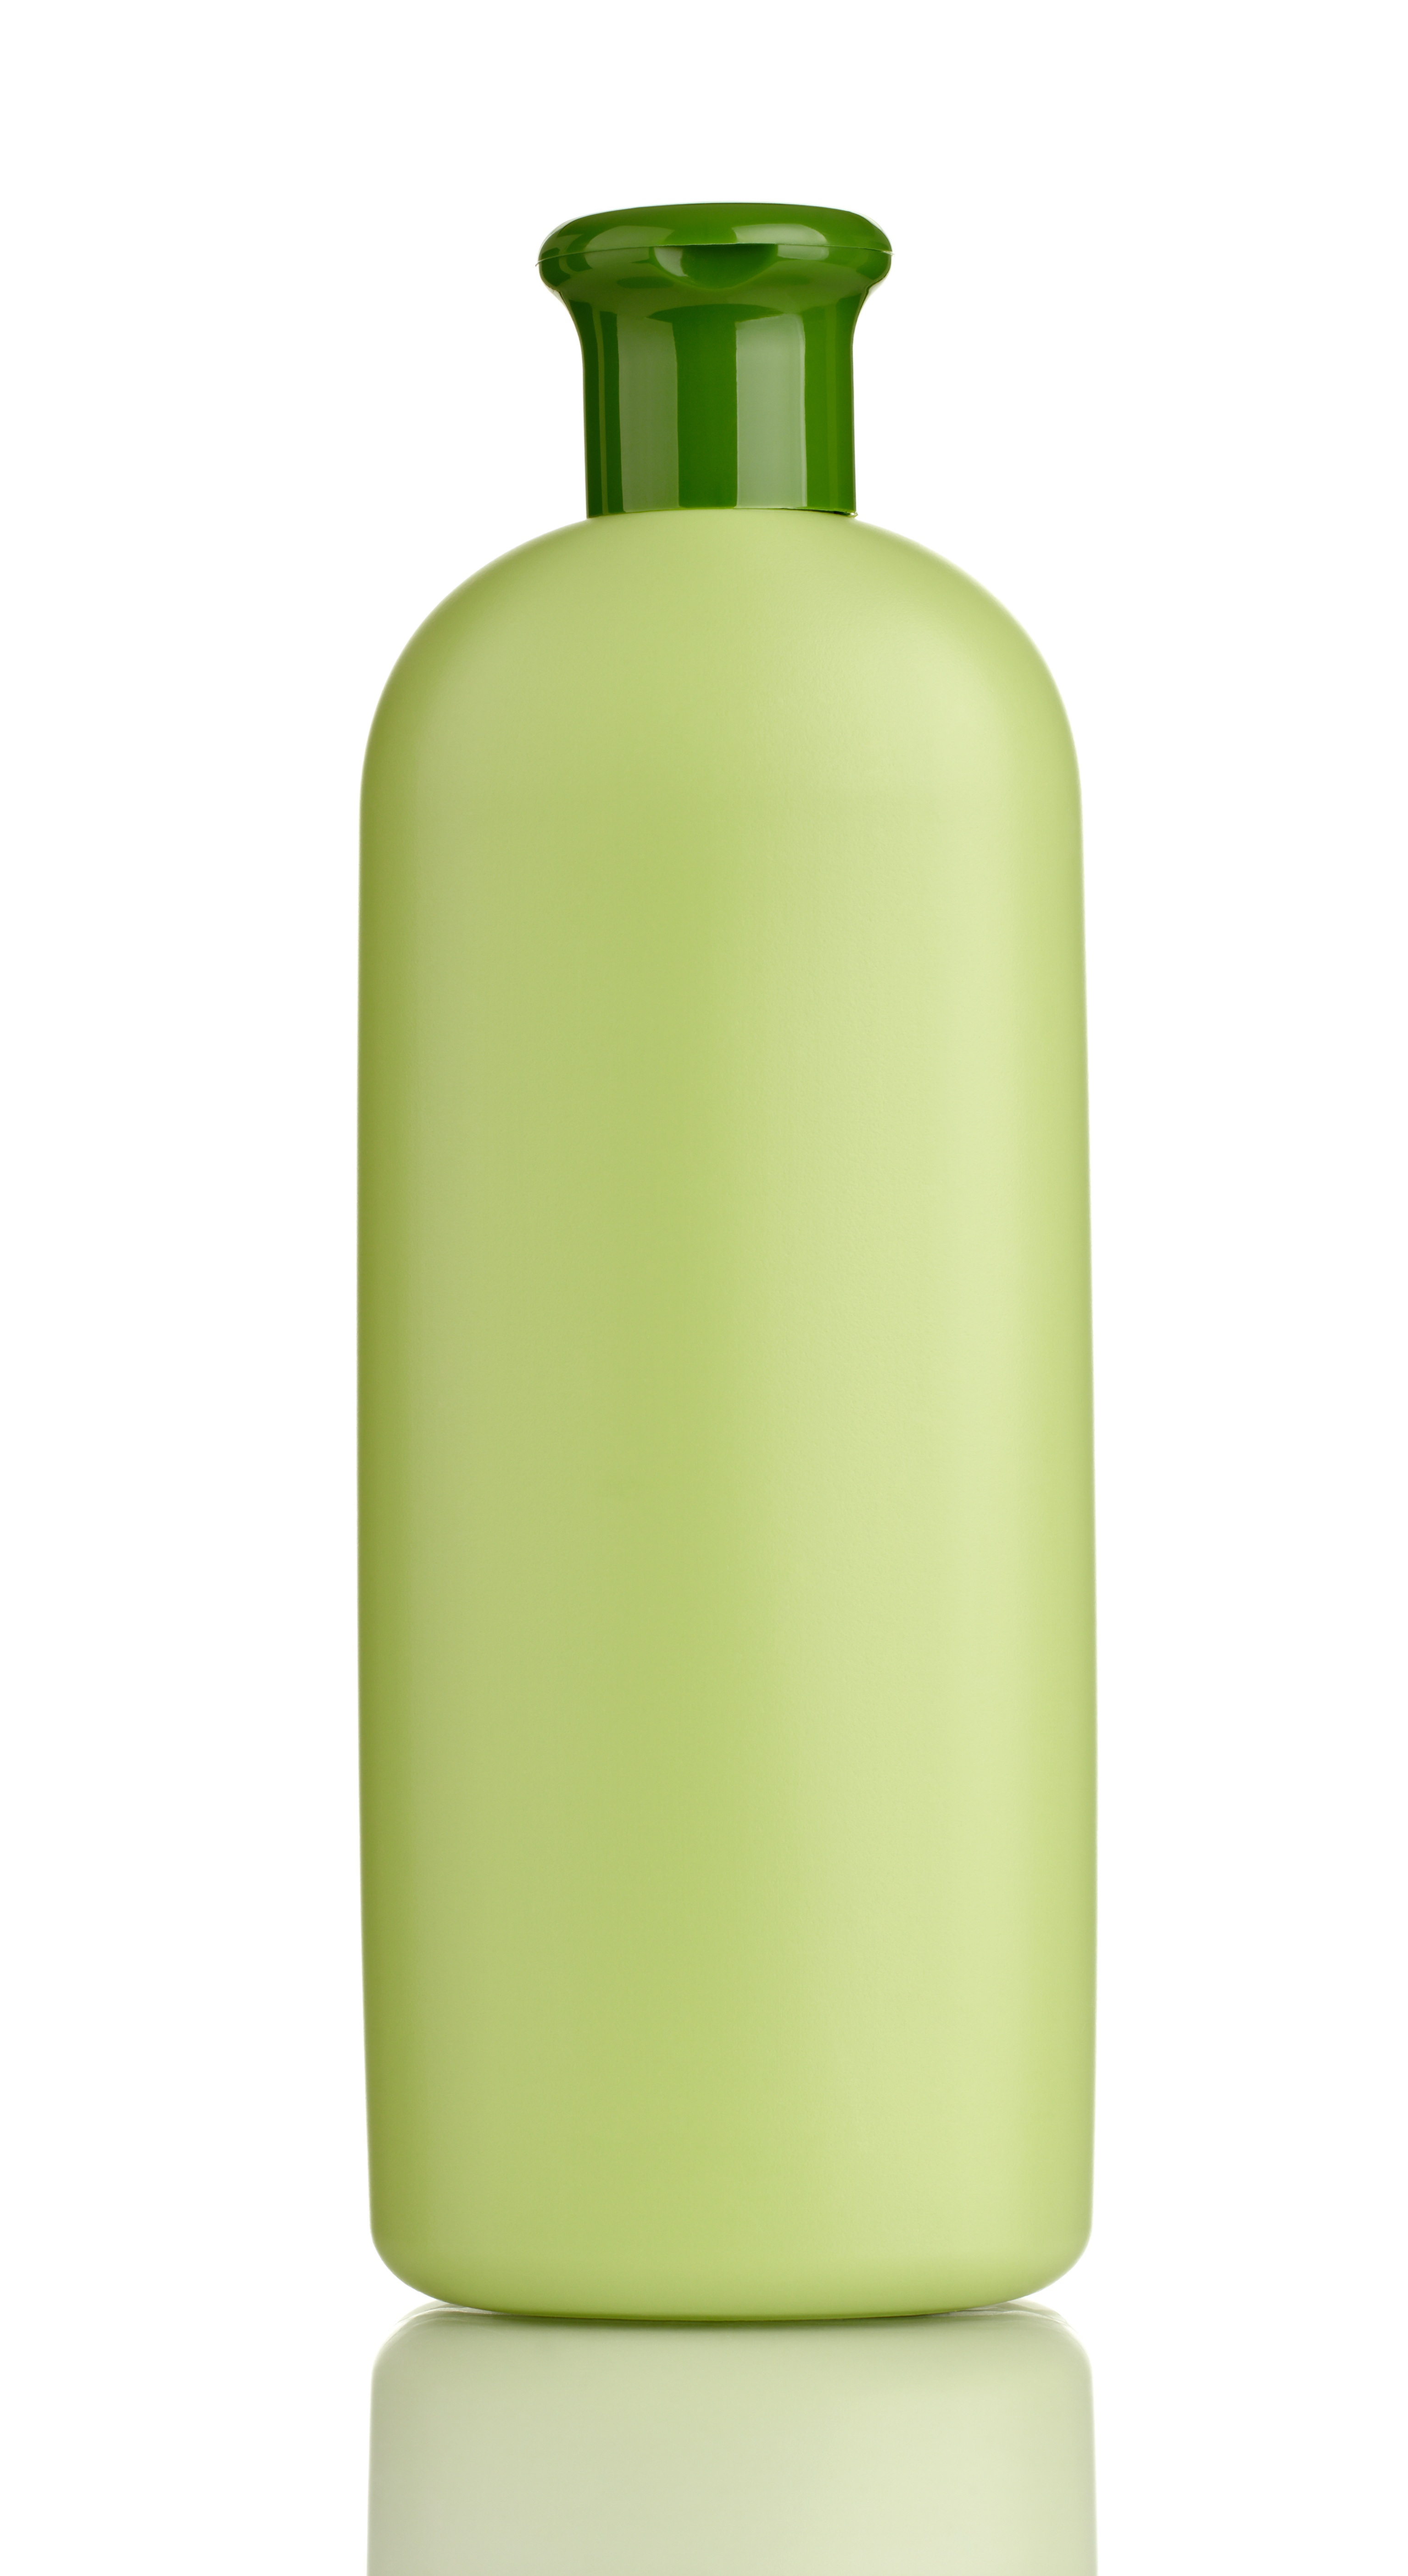 Shampoo Bottle Clip Art